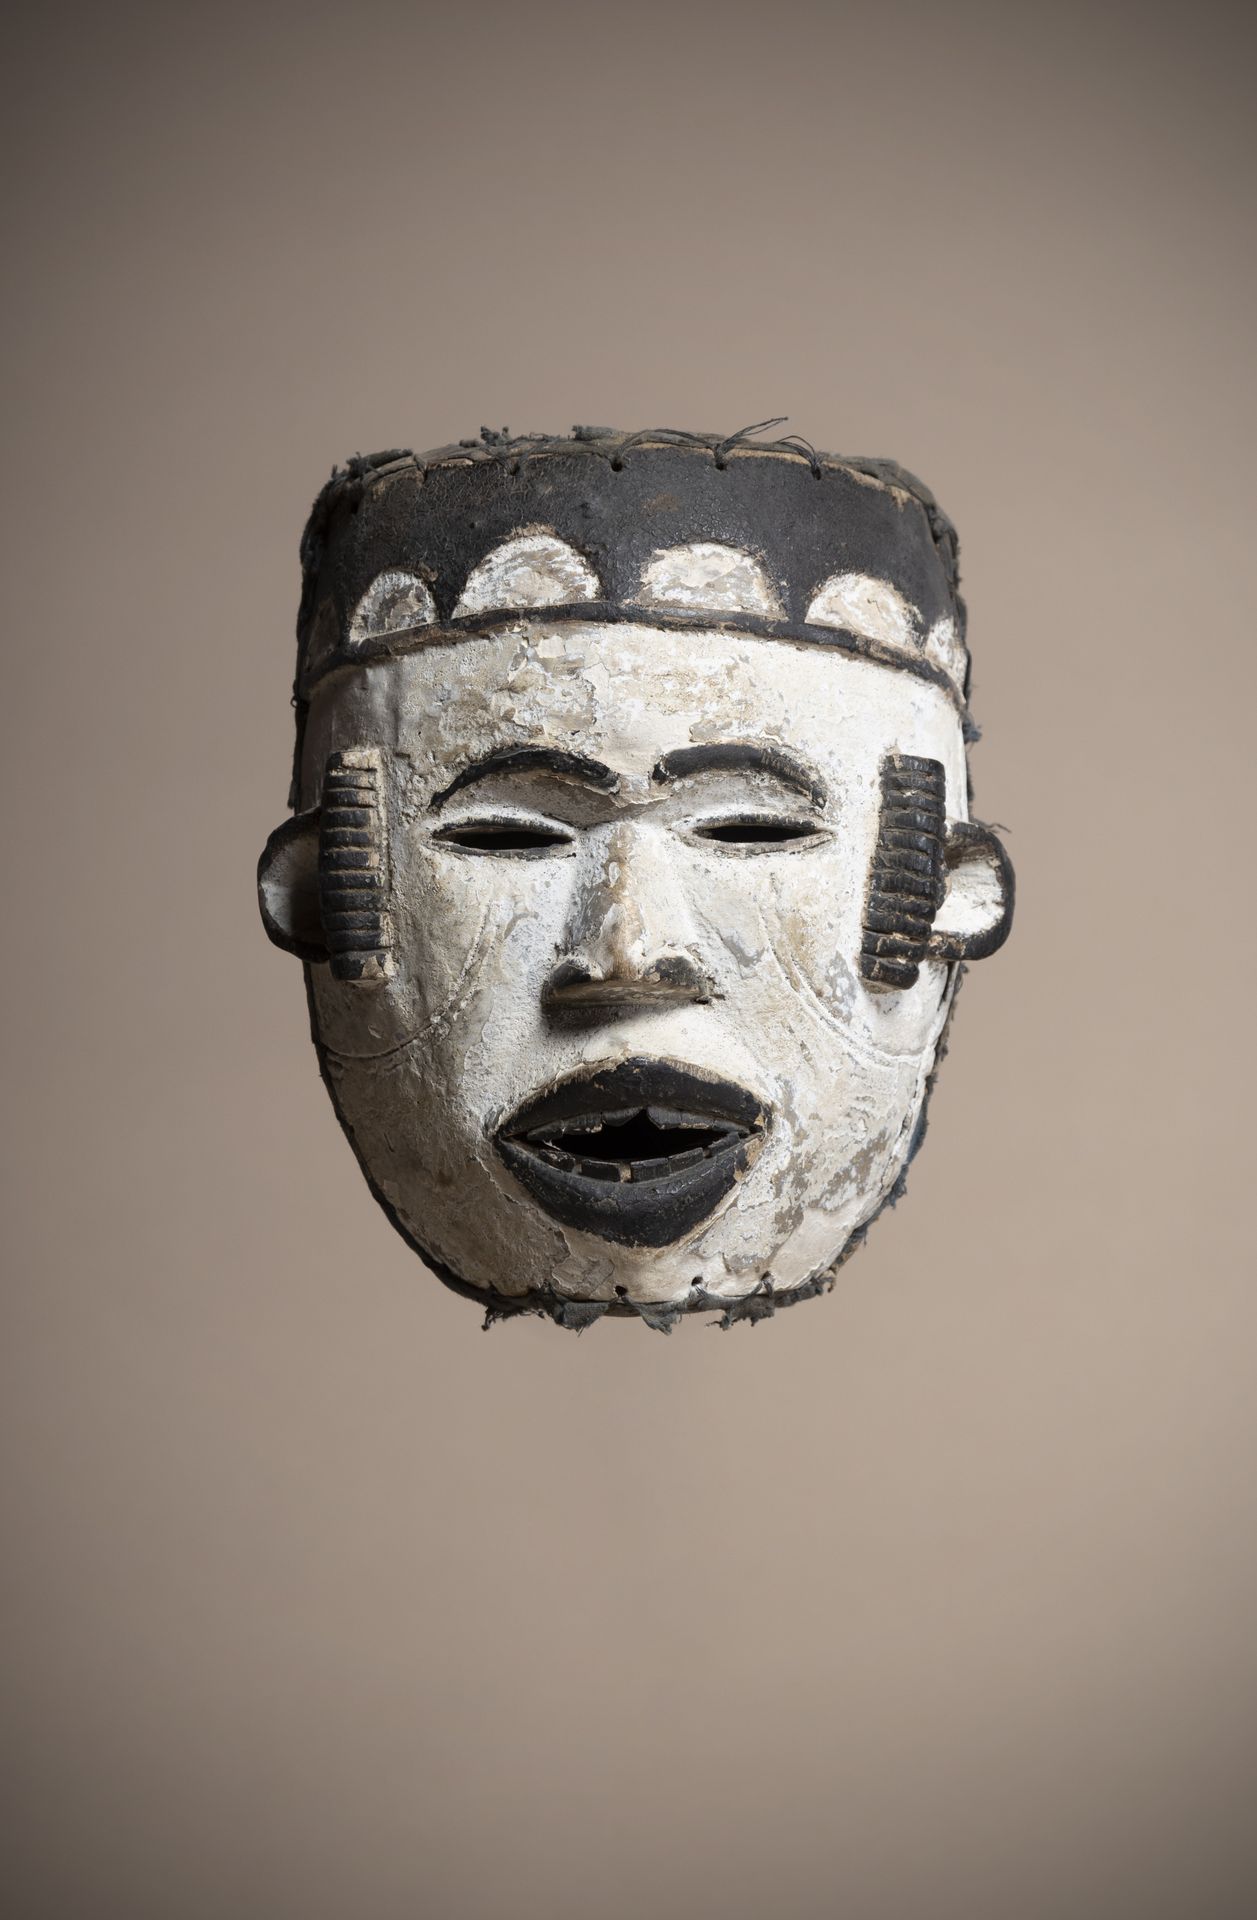 Null IDOMA (Nigeria)

Máscara facial blanca con marcas de escarificación tempora&hellip;